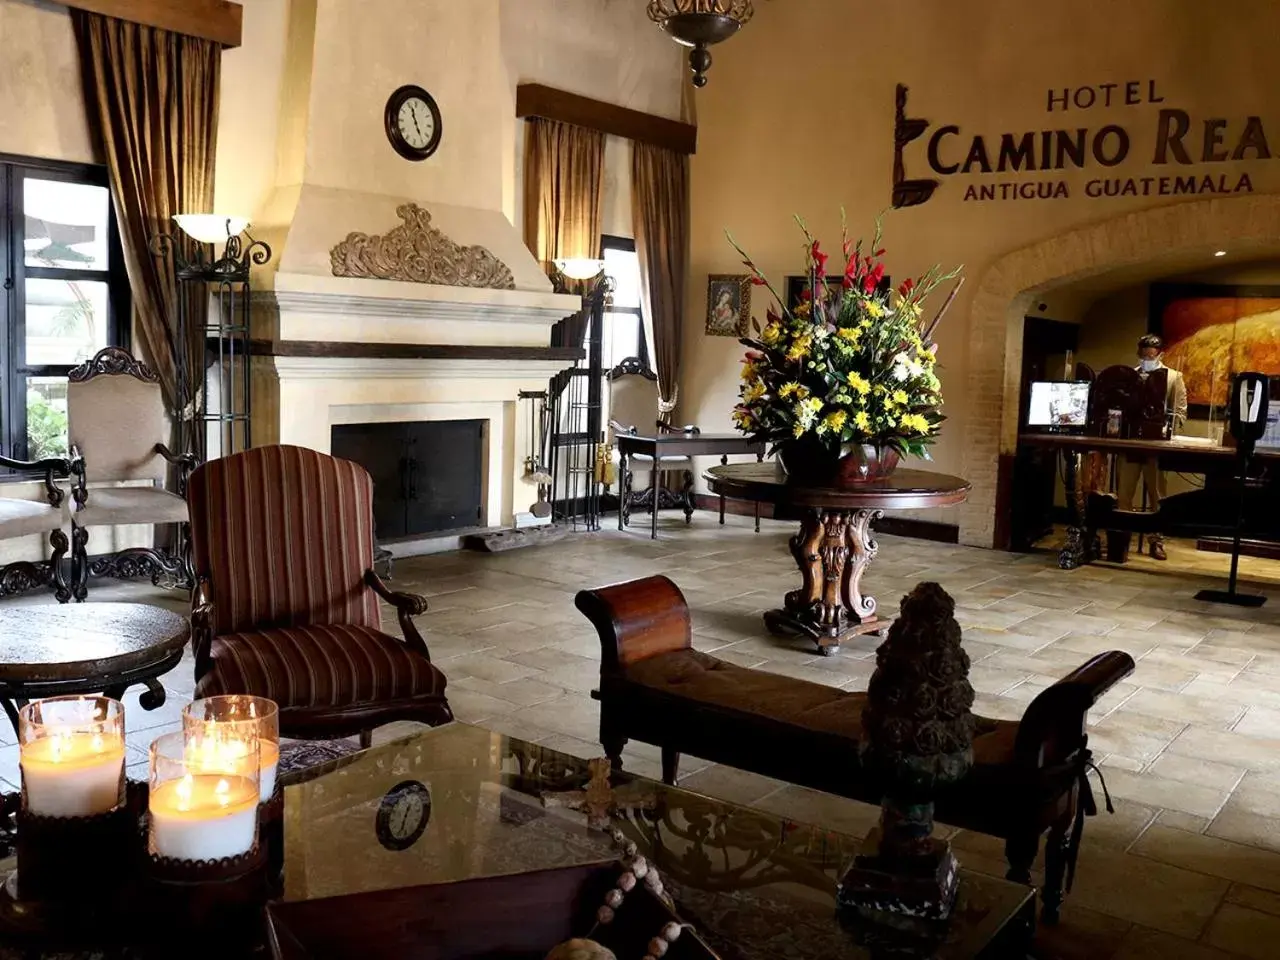 Lobby or reception in Camino Real Antigua